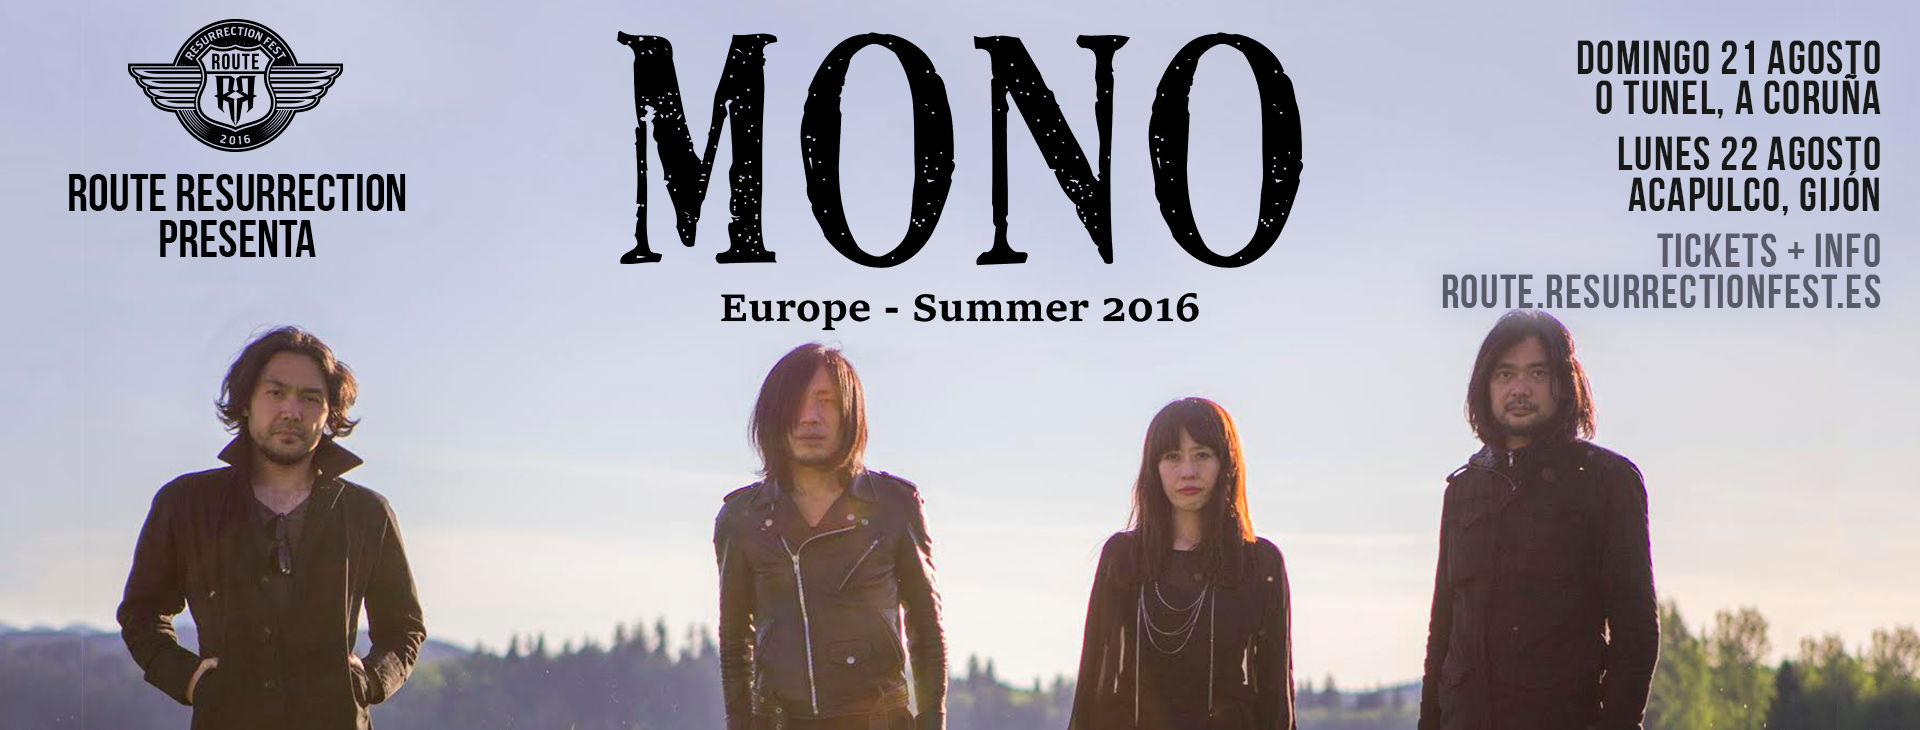 Route Resurrection Fest 2016 - MONO - Event